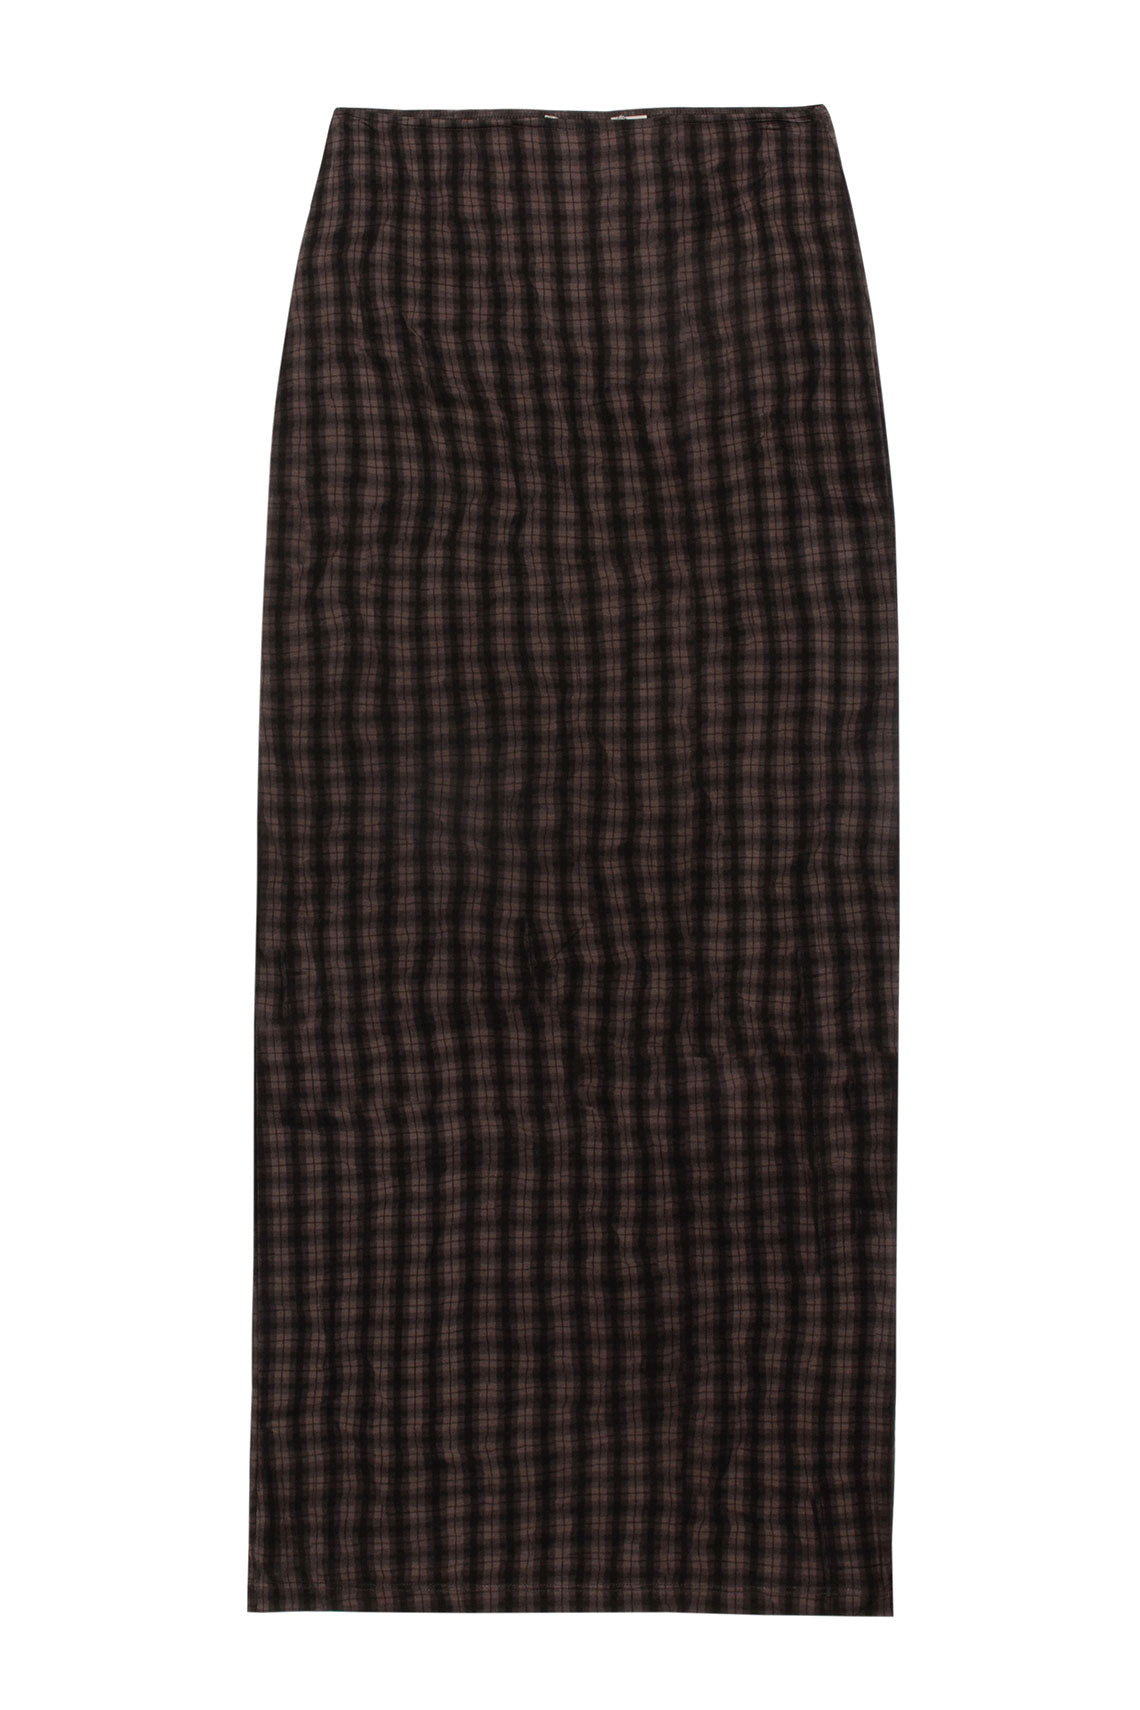 Dark Brown Raff Tube Skirt